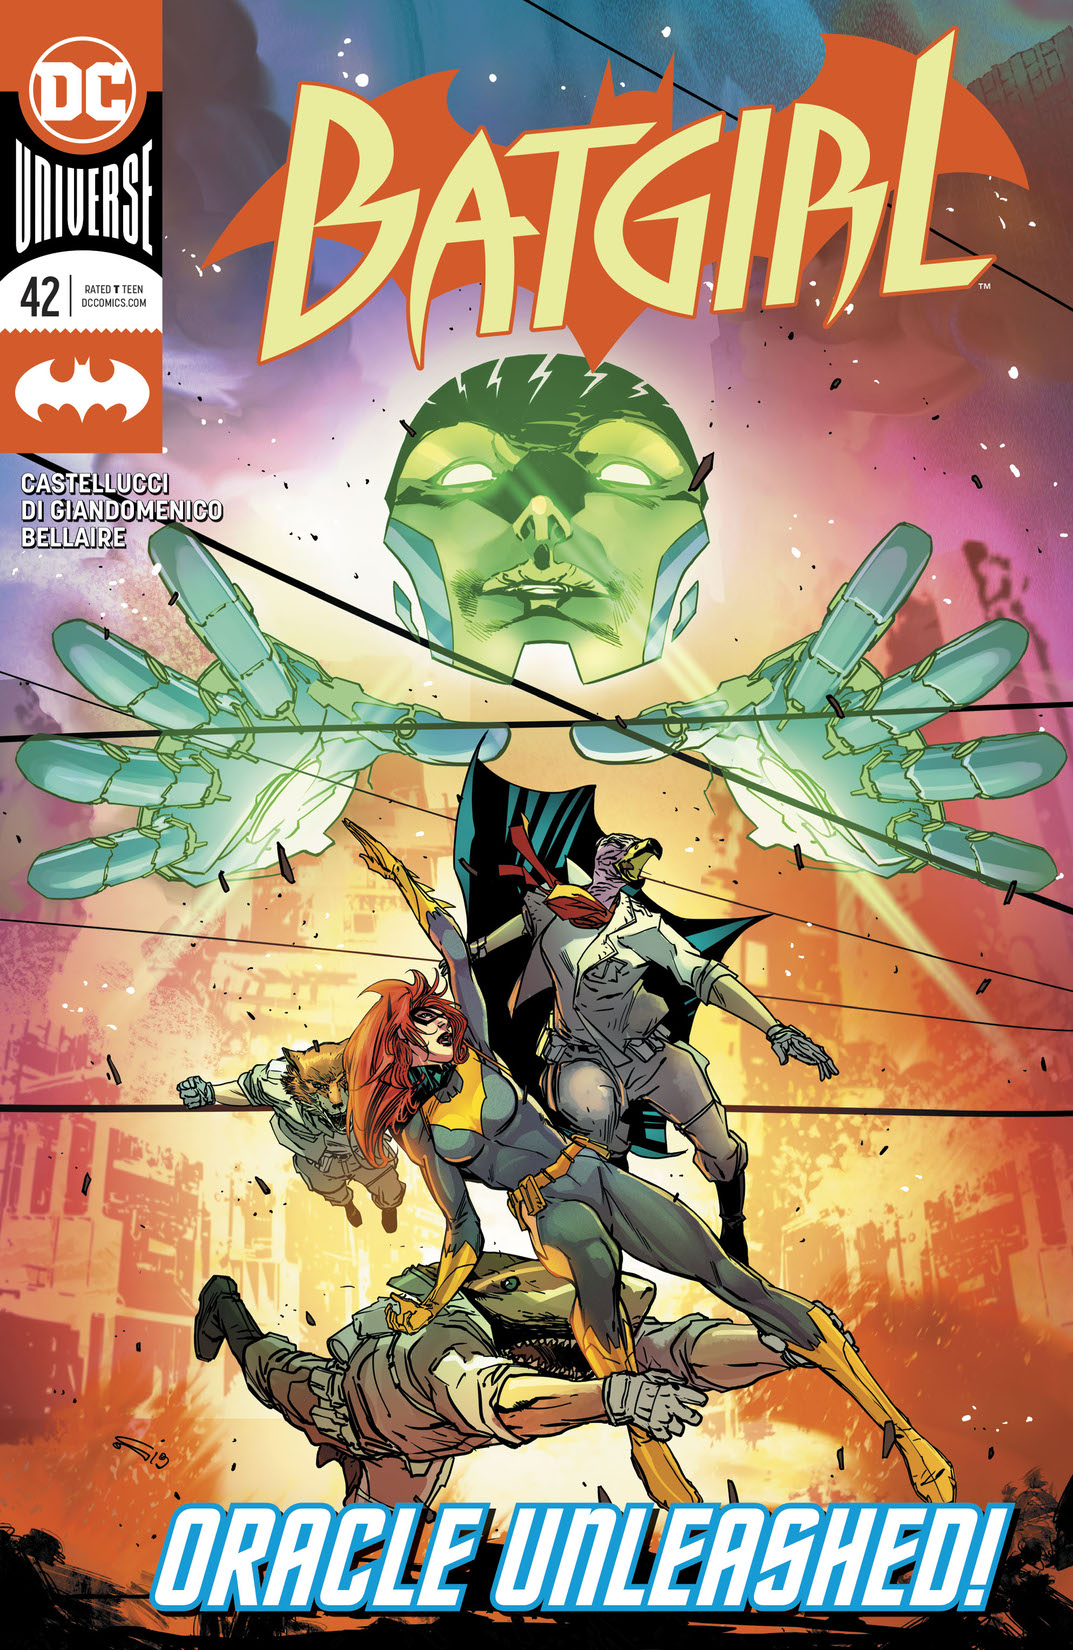 Batgirl (2016-) #42 preview images